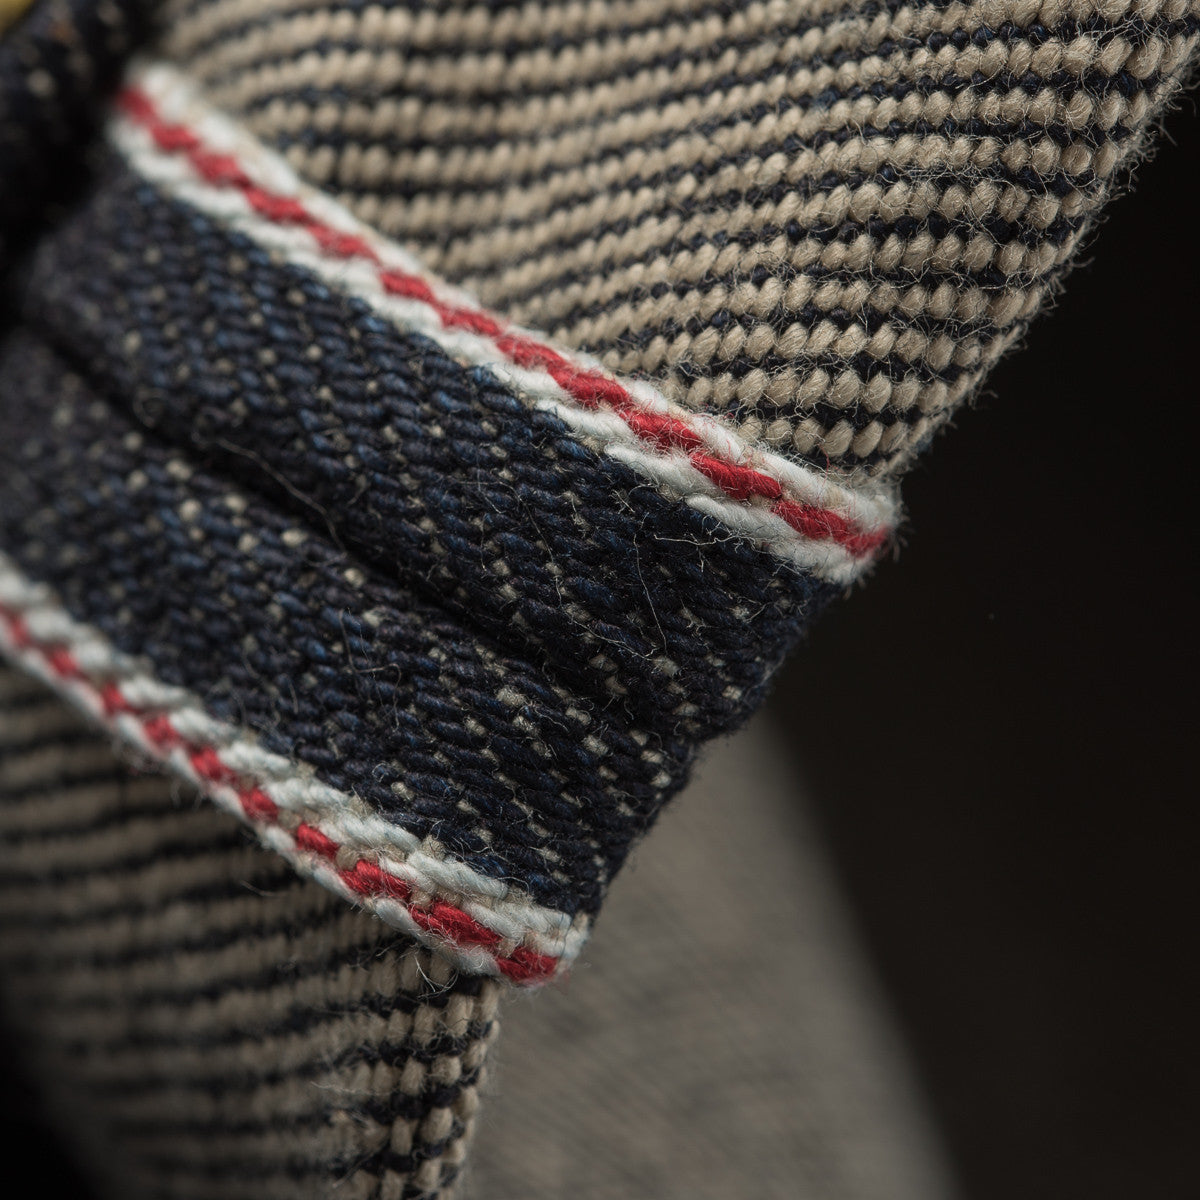 Premium Photo | Denim jeans texture background.